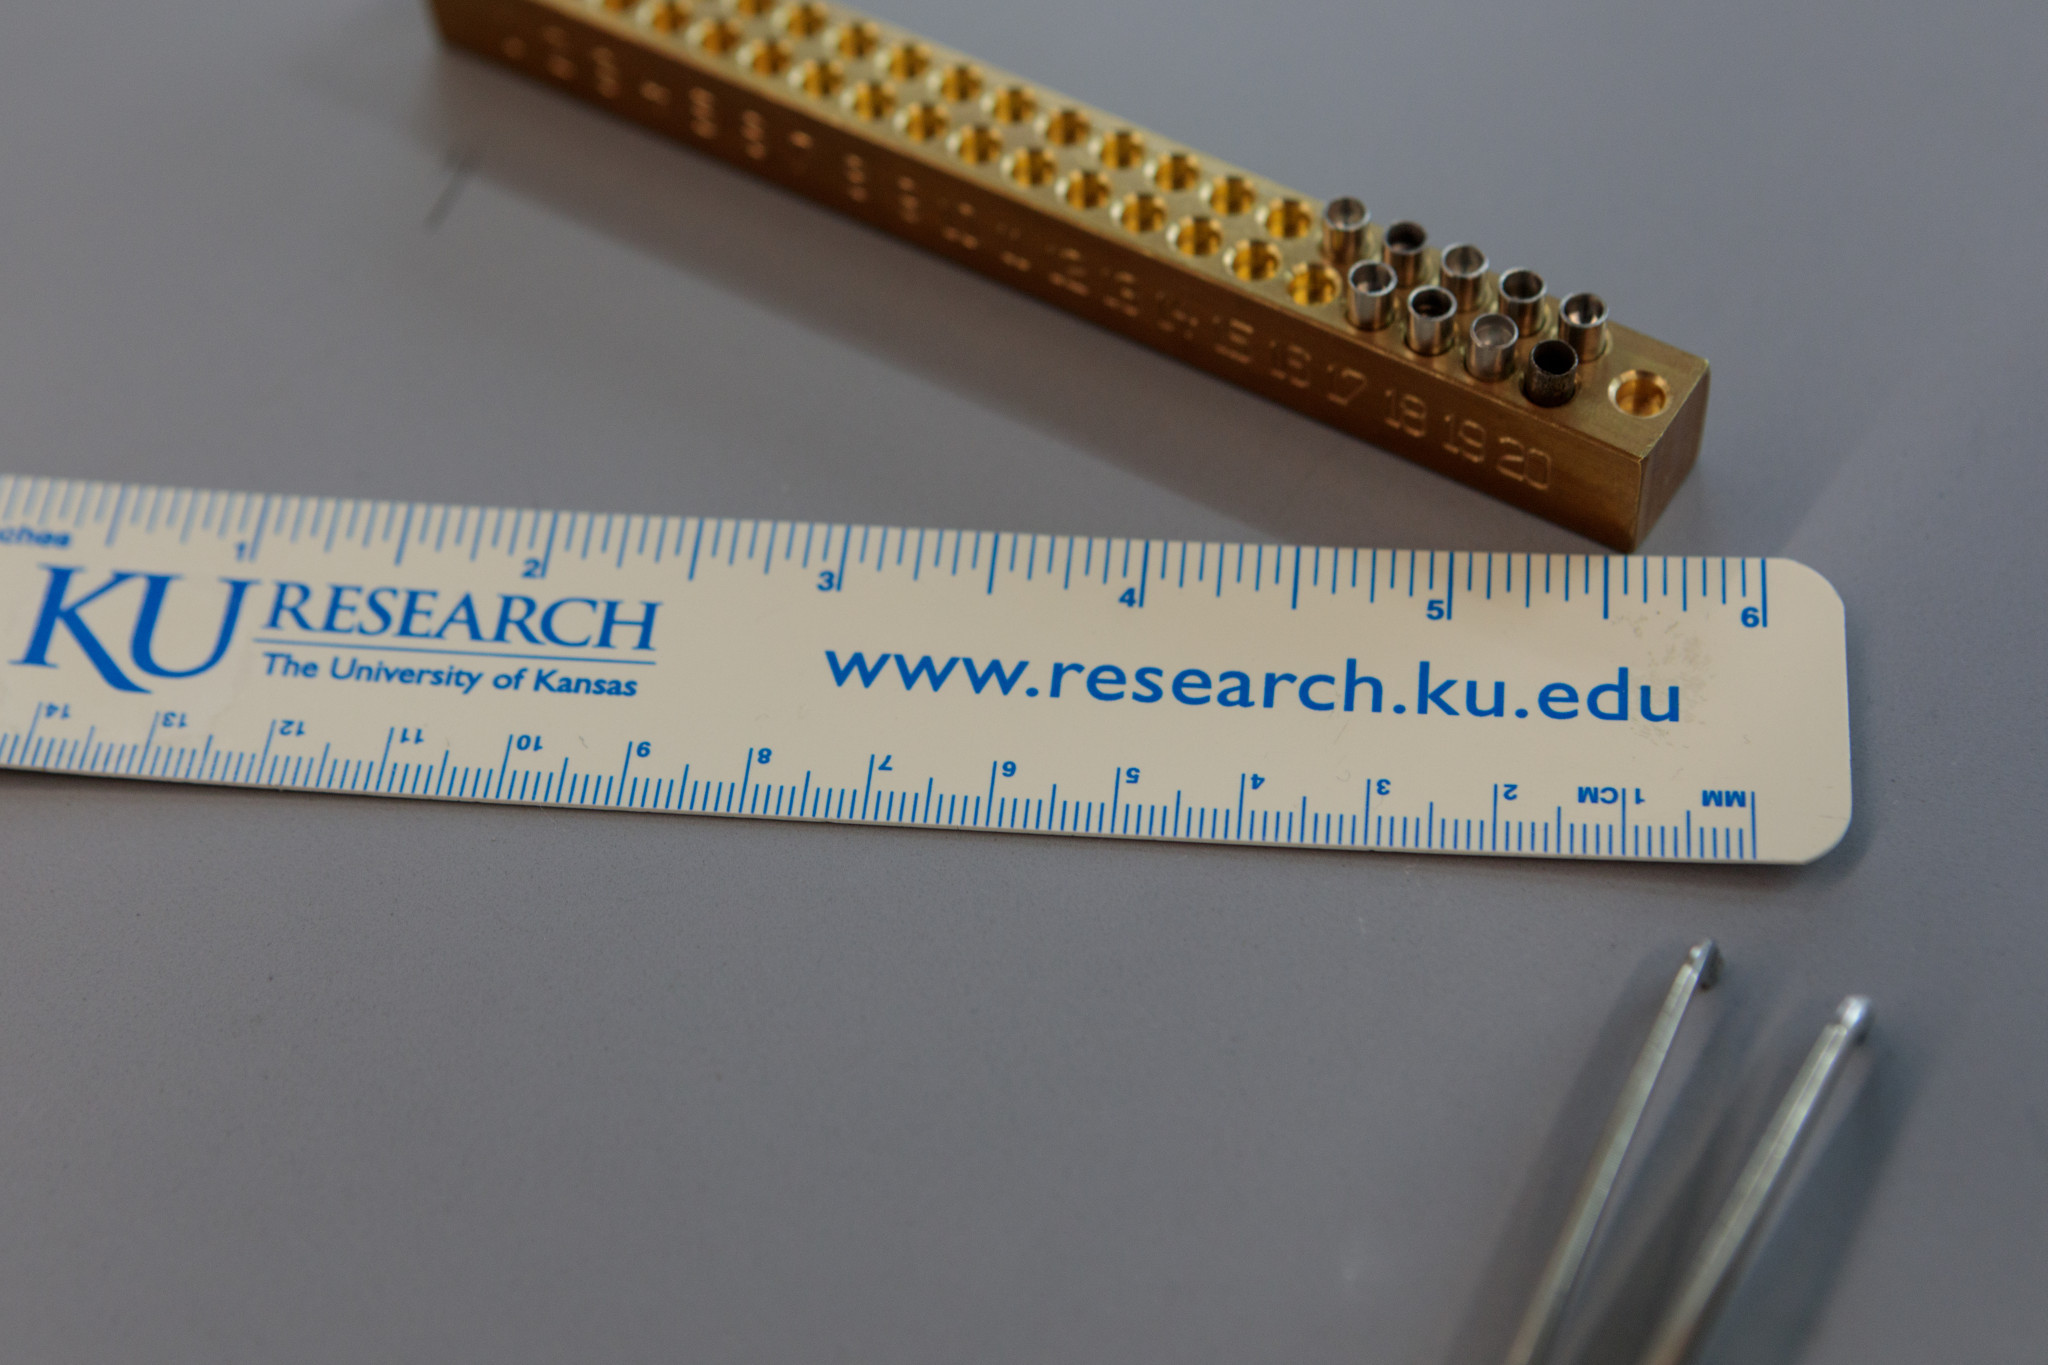 a ruler with KU Research the University of Kansas printed on it along with www.research.ku.edu